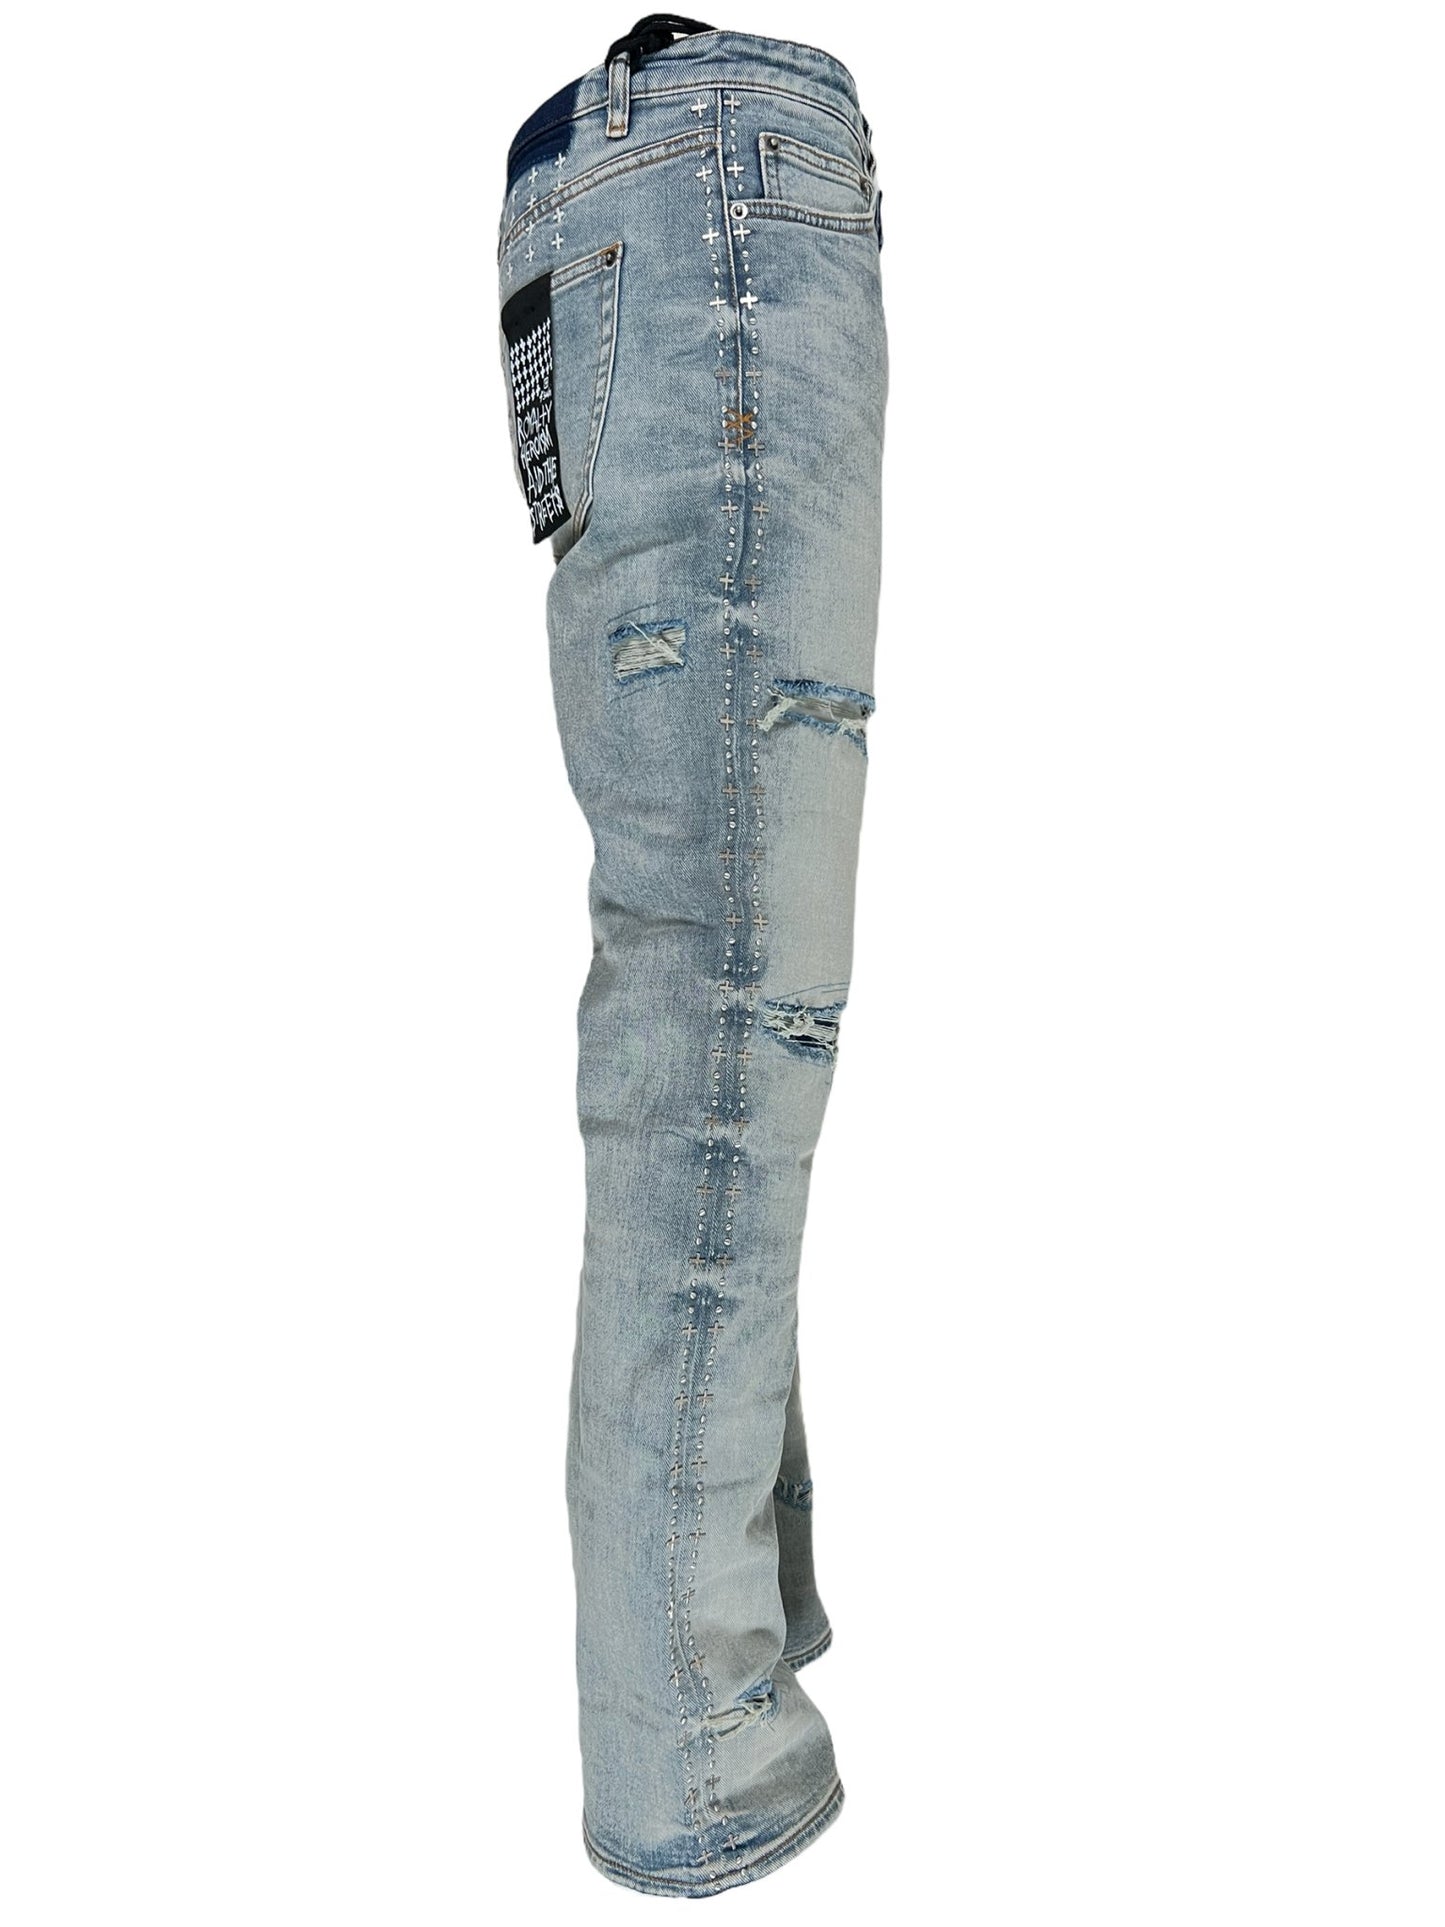 Side view of a pair of distressed Ksubi KSUBI BRONKO DYANAMITE METAL DENIM blue jeans with patchwork details.